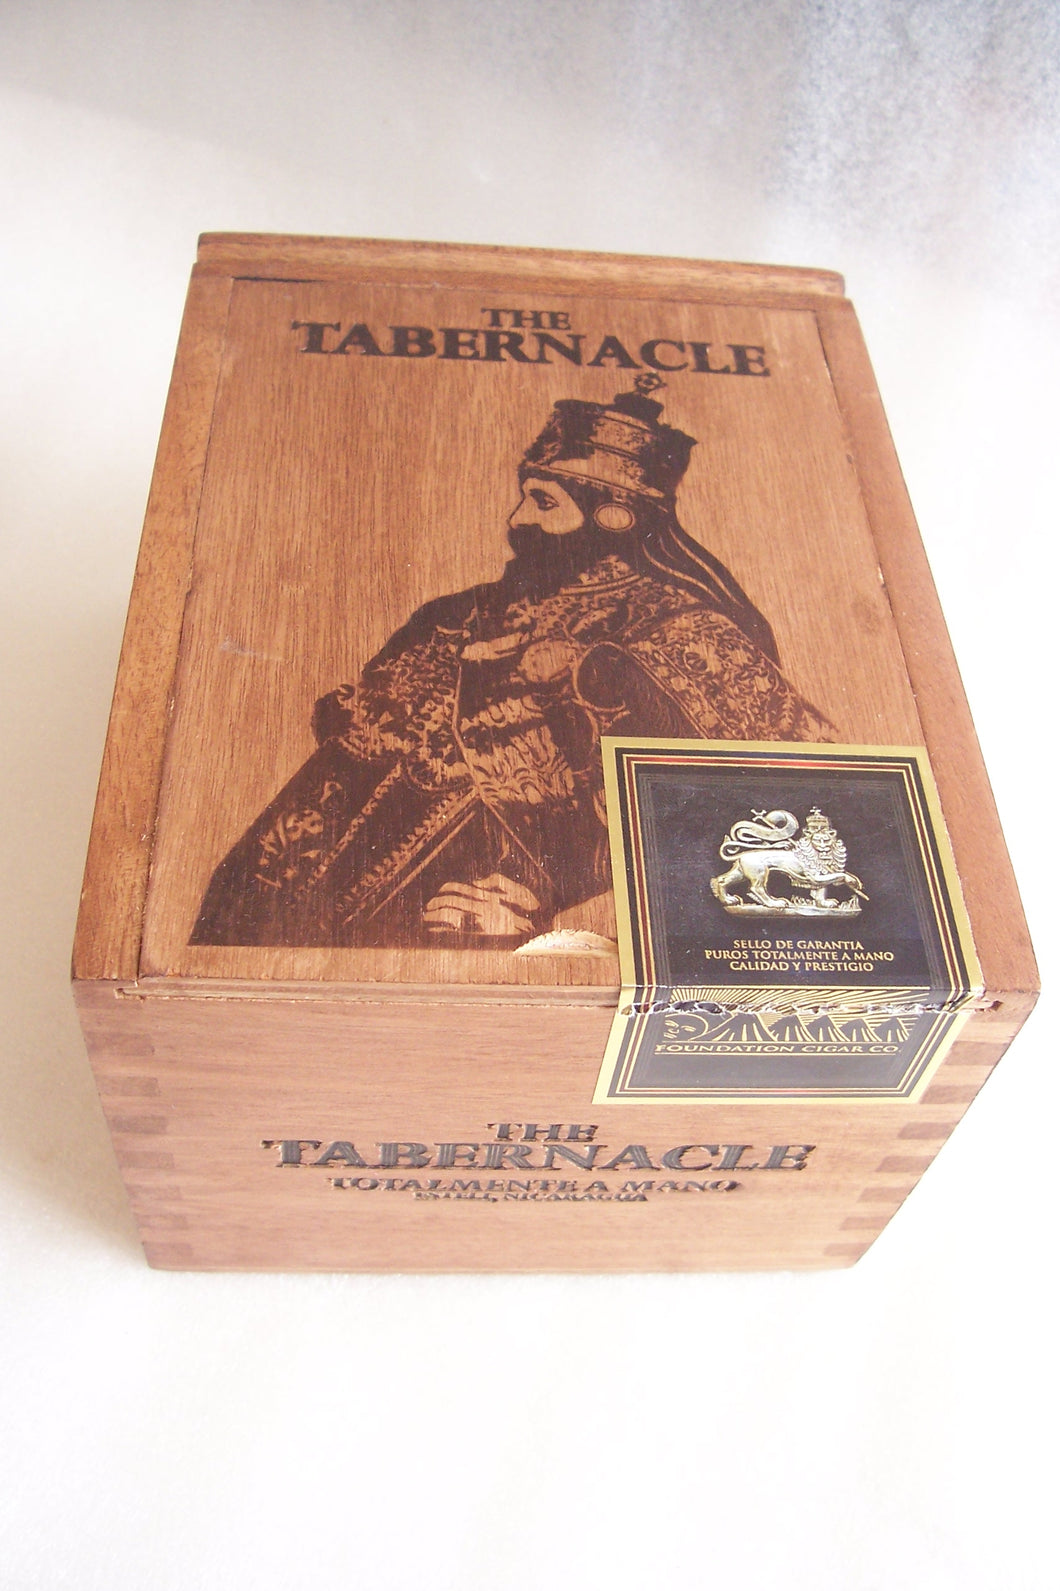 Foundation Tabernacle Toro Empty Cigar Box